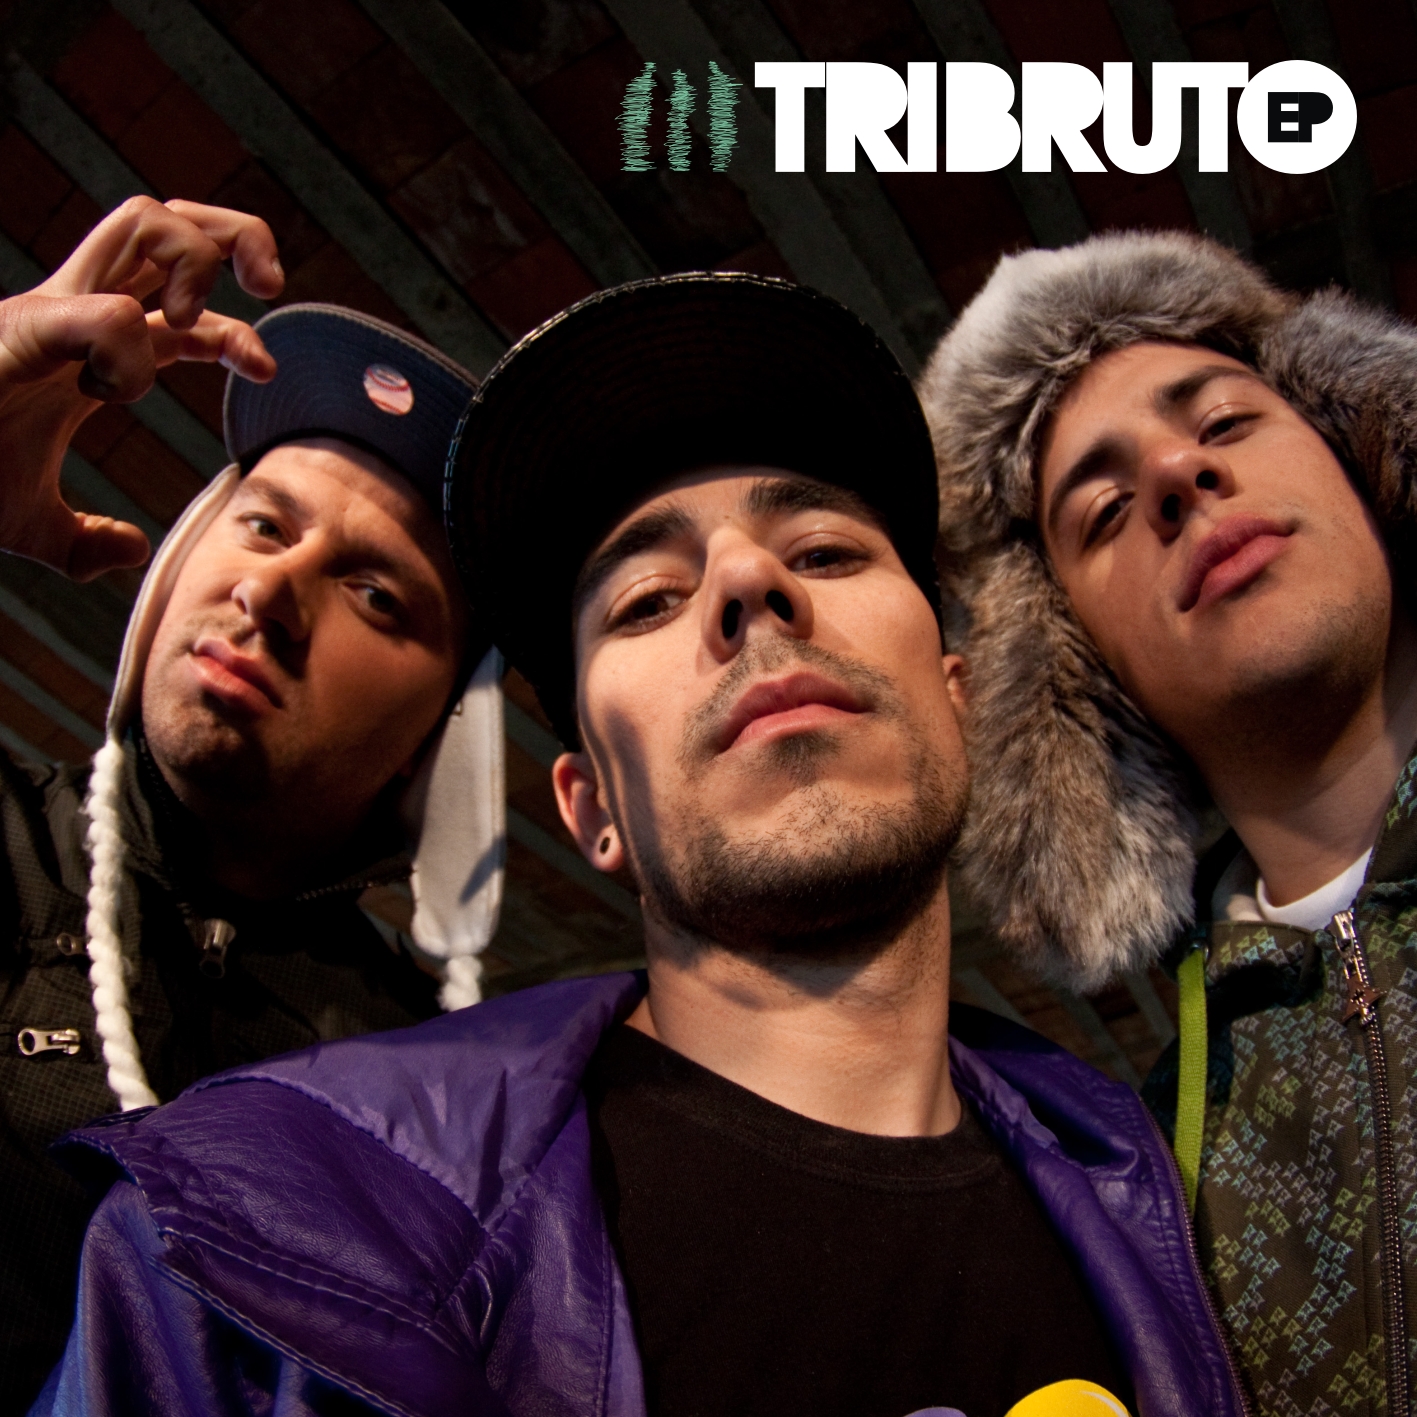 Tribruto - EP